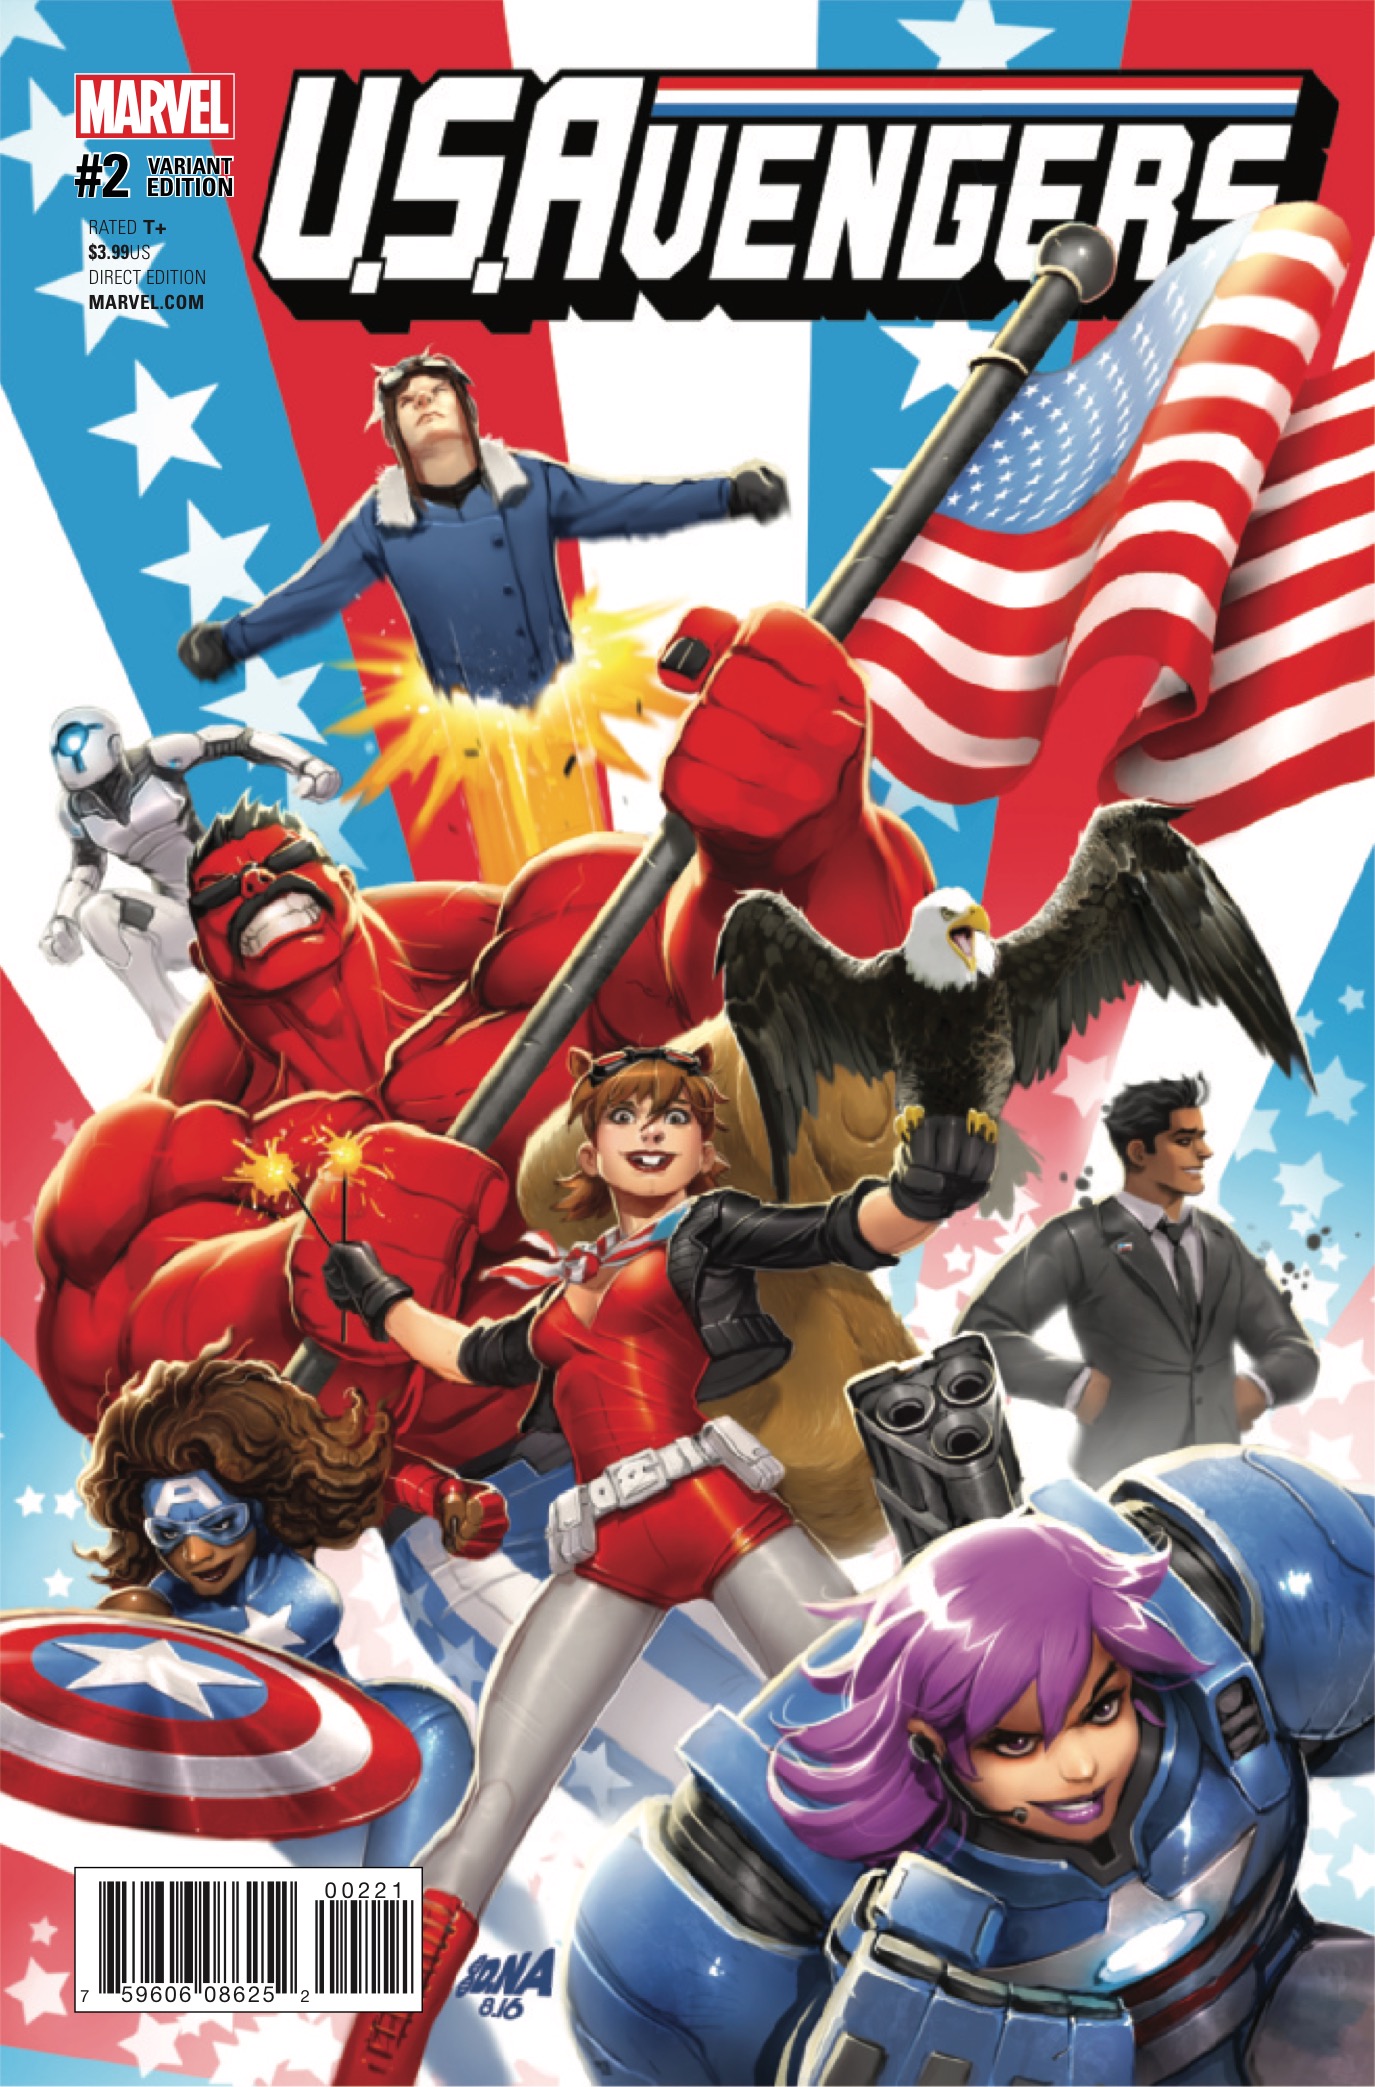 Marvel Preview: U.S.Avengers #2